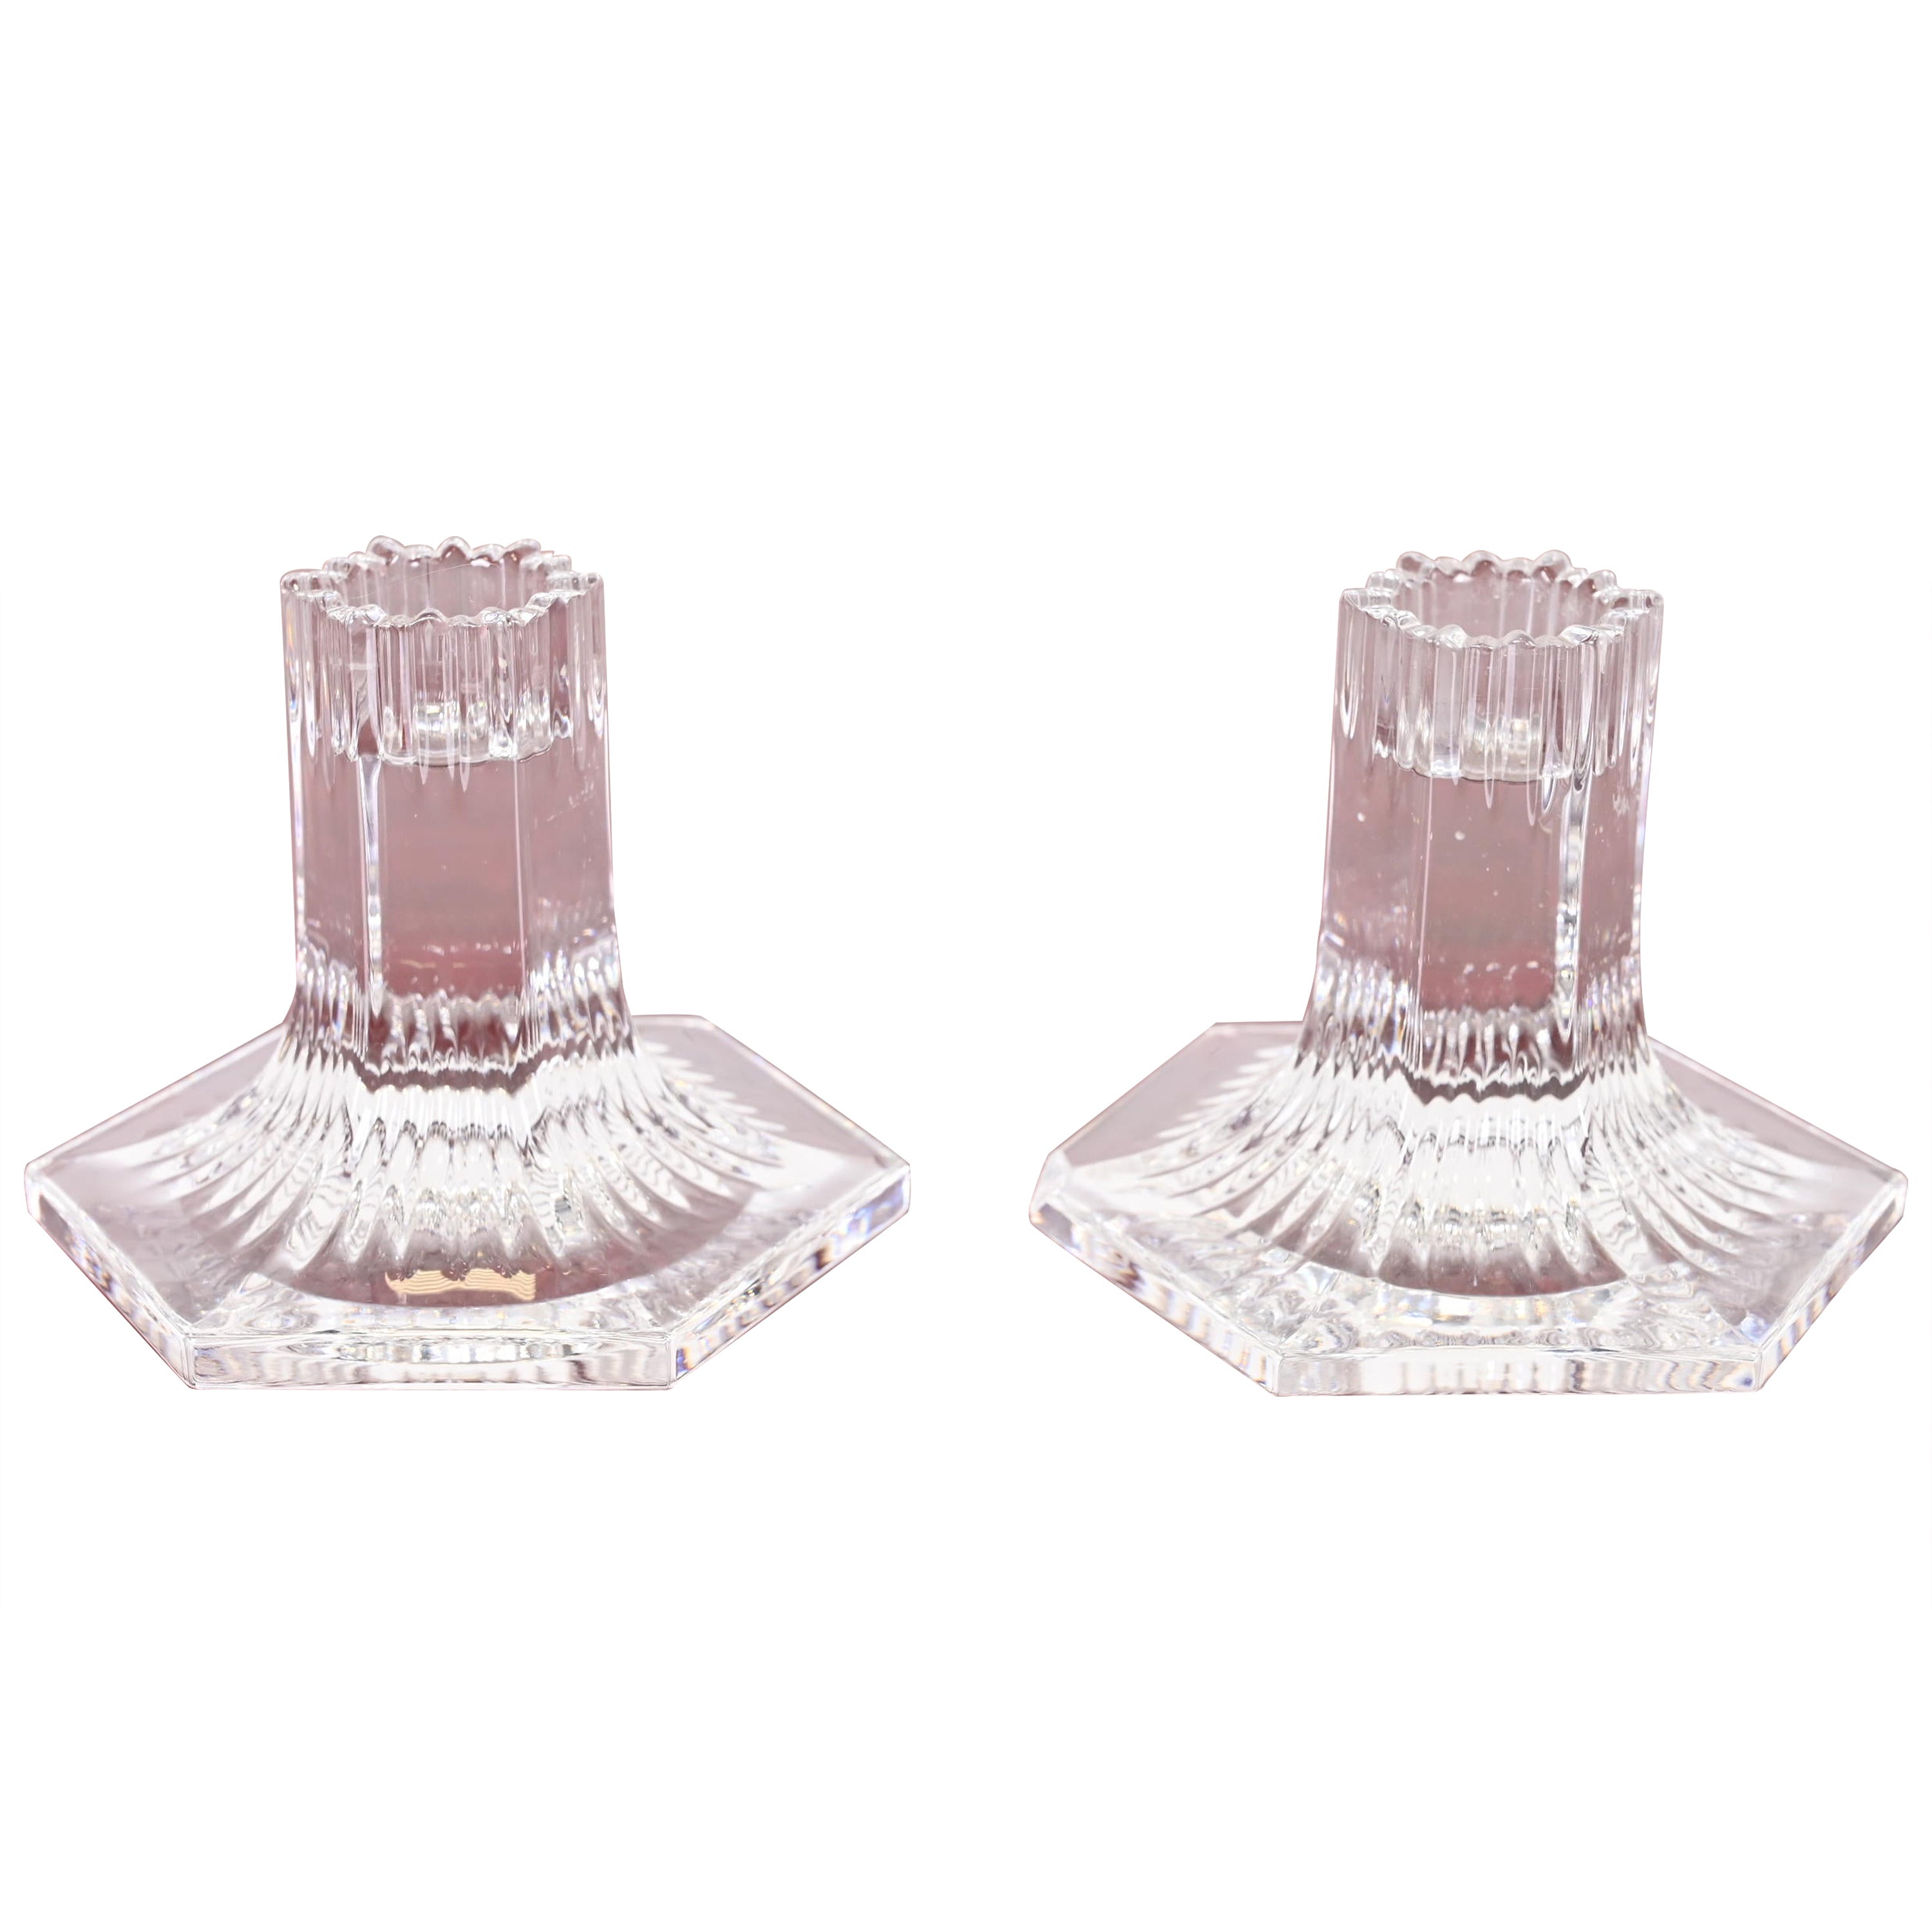 Tiffany & Co. Clear Crystal Candlesticks, Pair